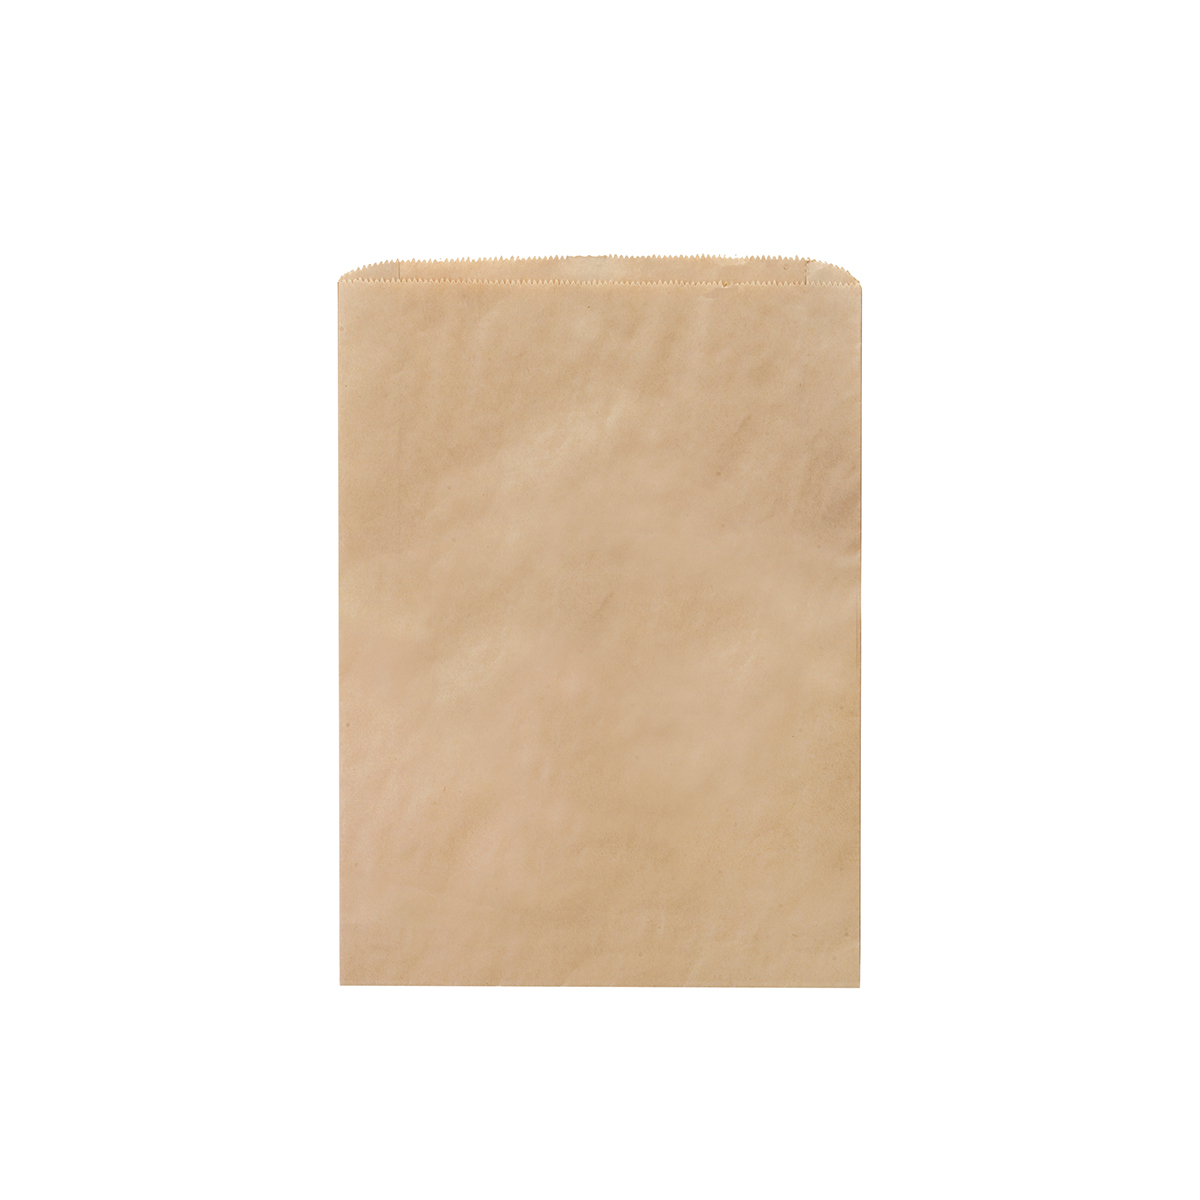 Natural Kraft Paper Merchandise Bag (8.5"W x 11"H)